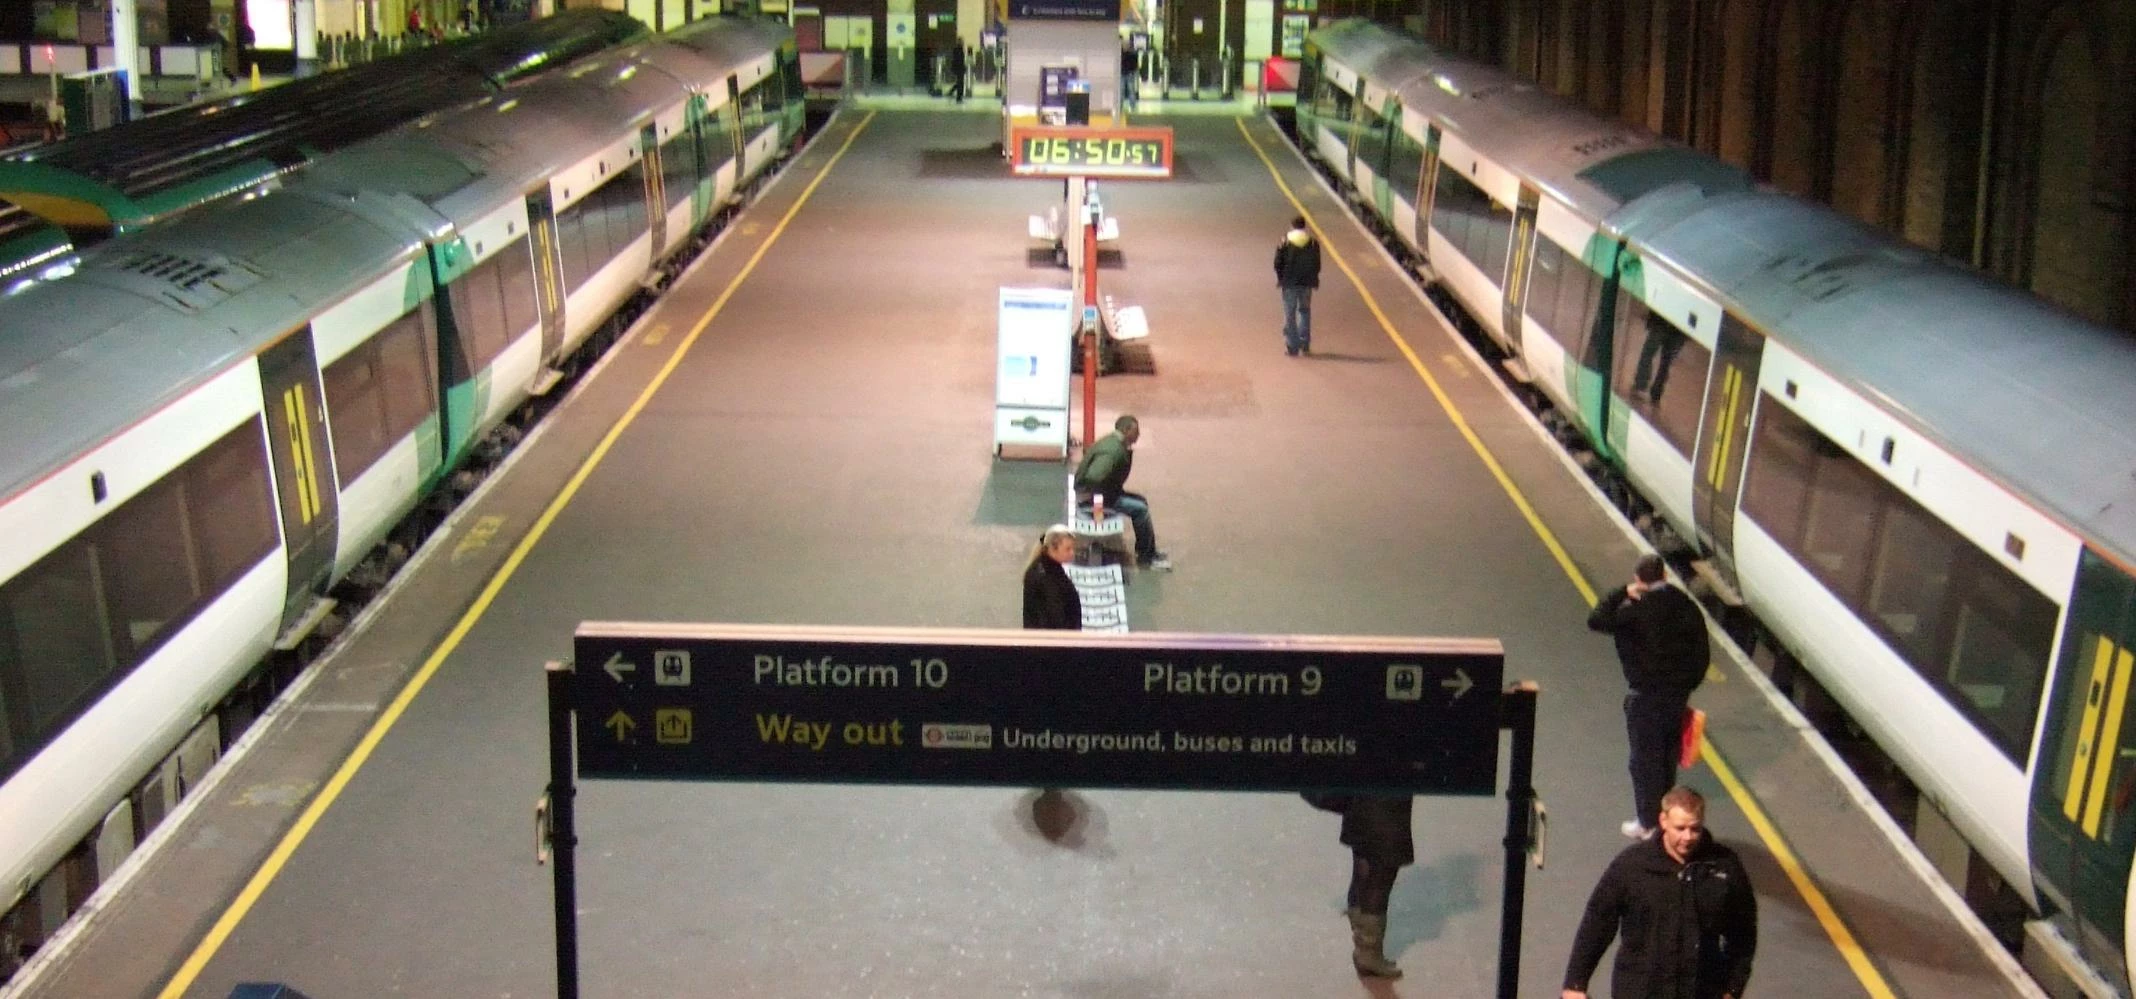 Trains at Charing Cross station